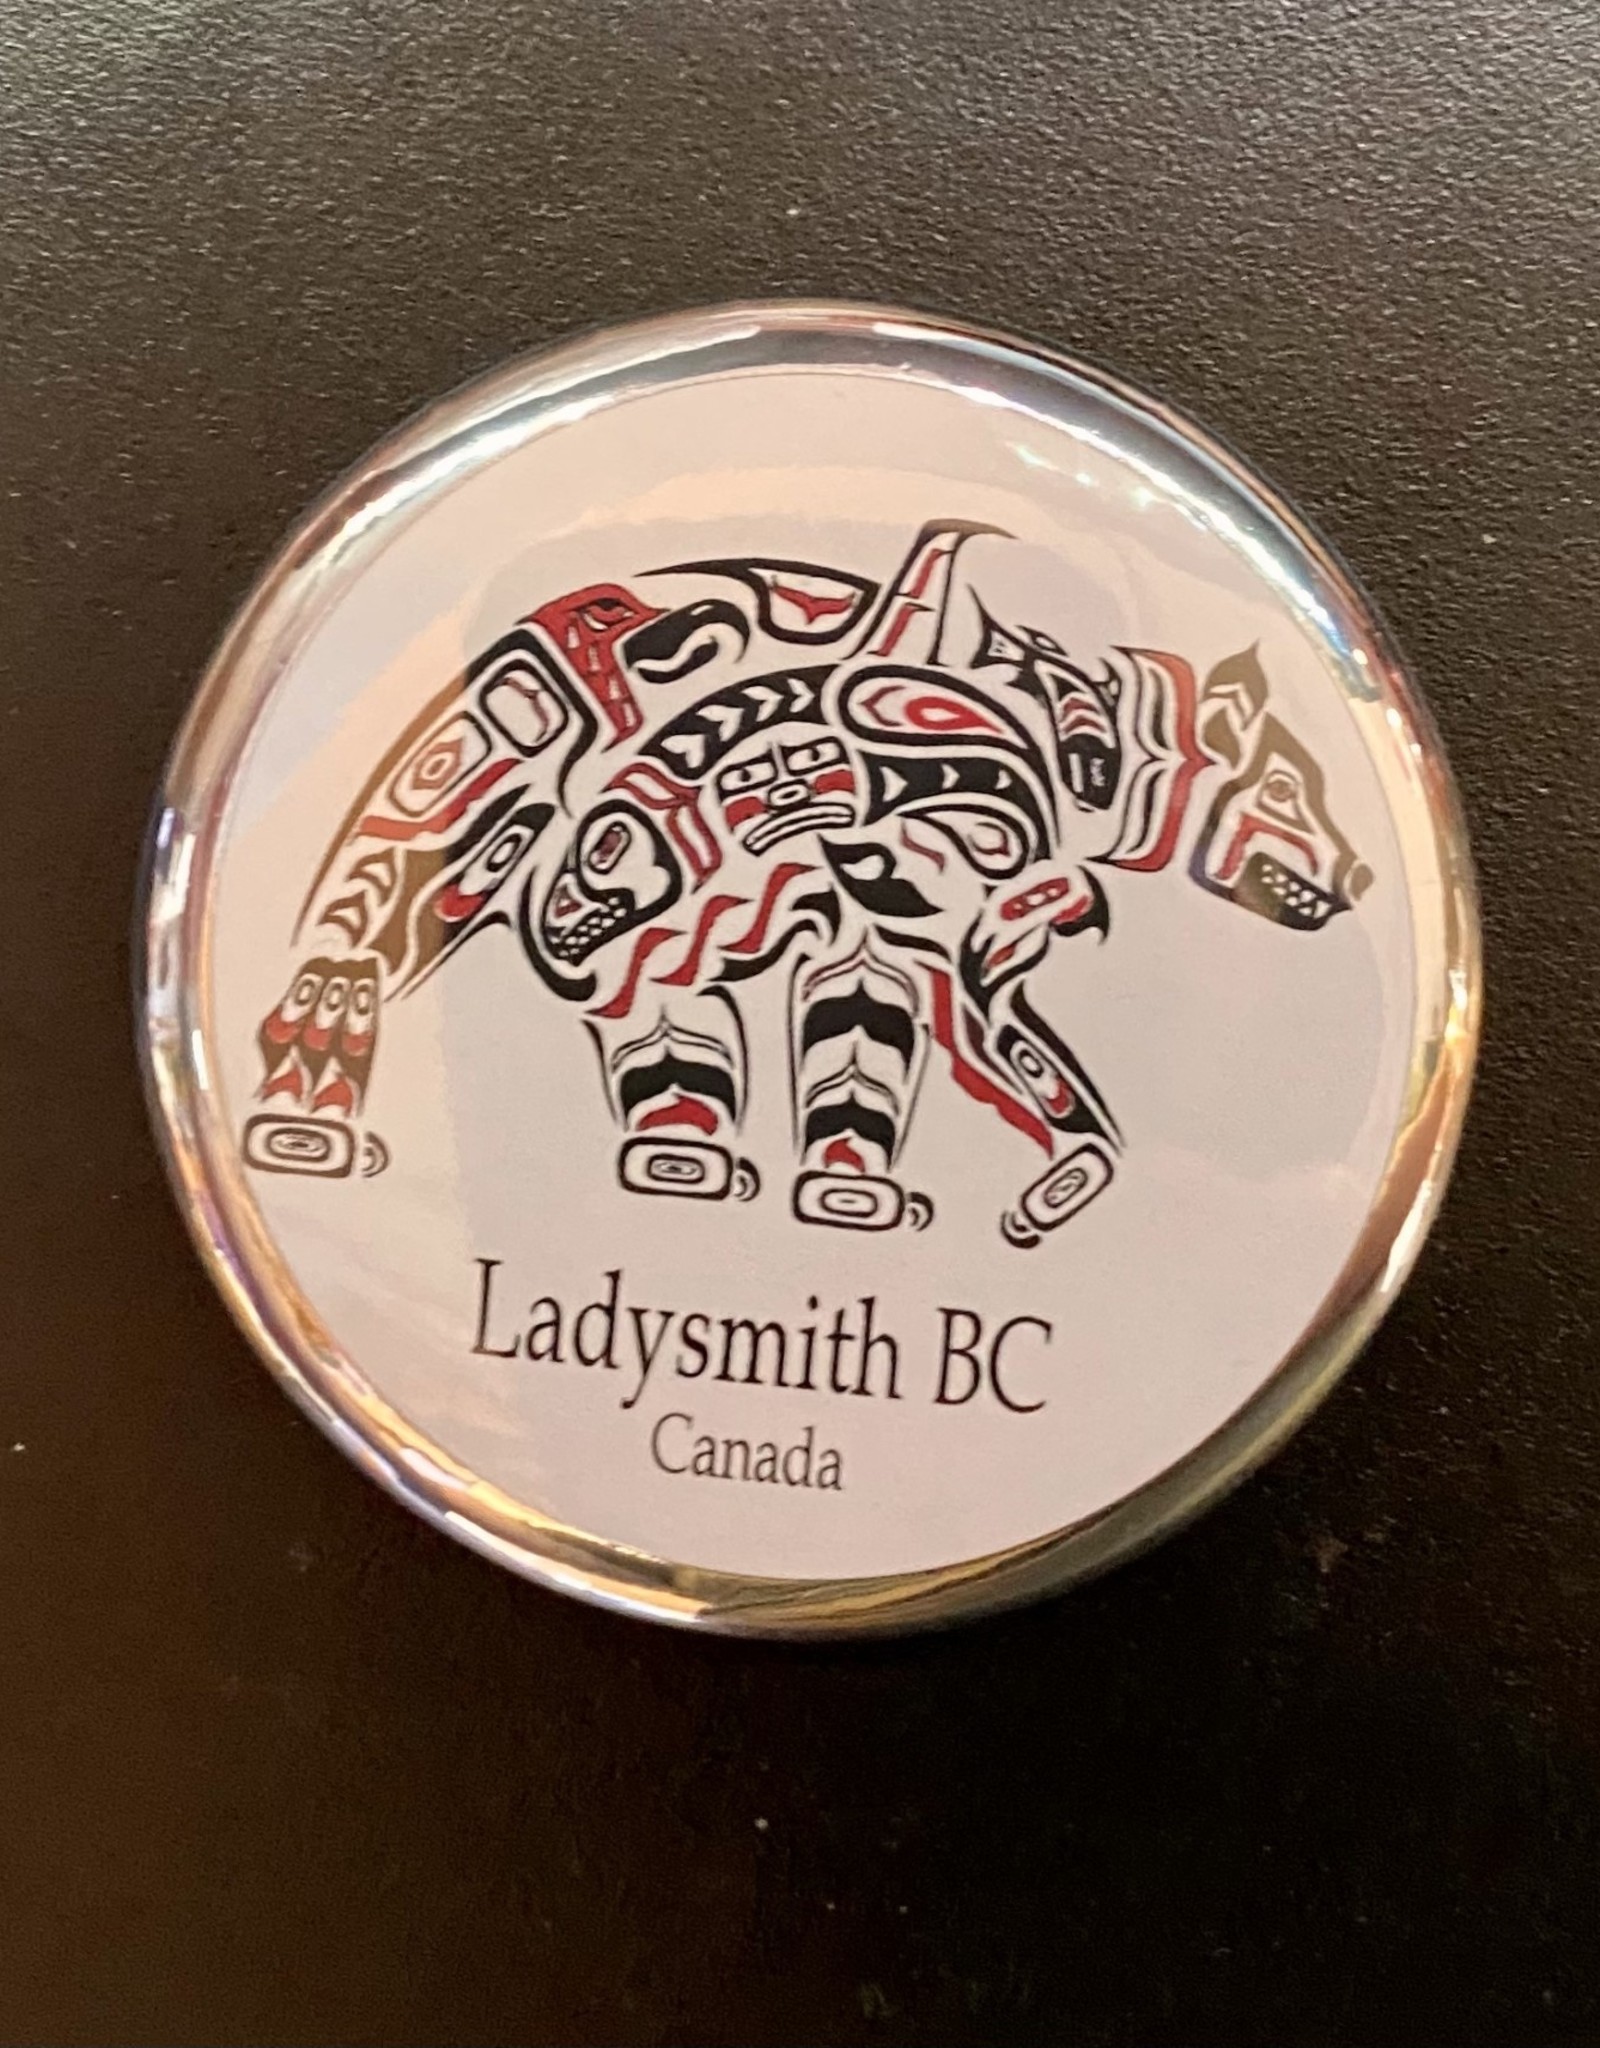 Ladysmith Bear & Orca WhaleMagnet (Silver)